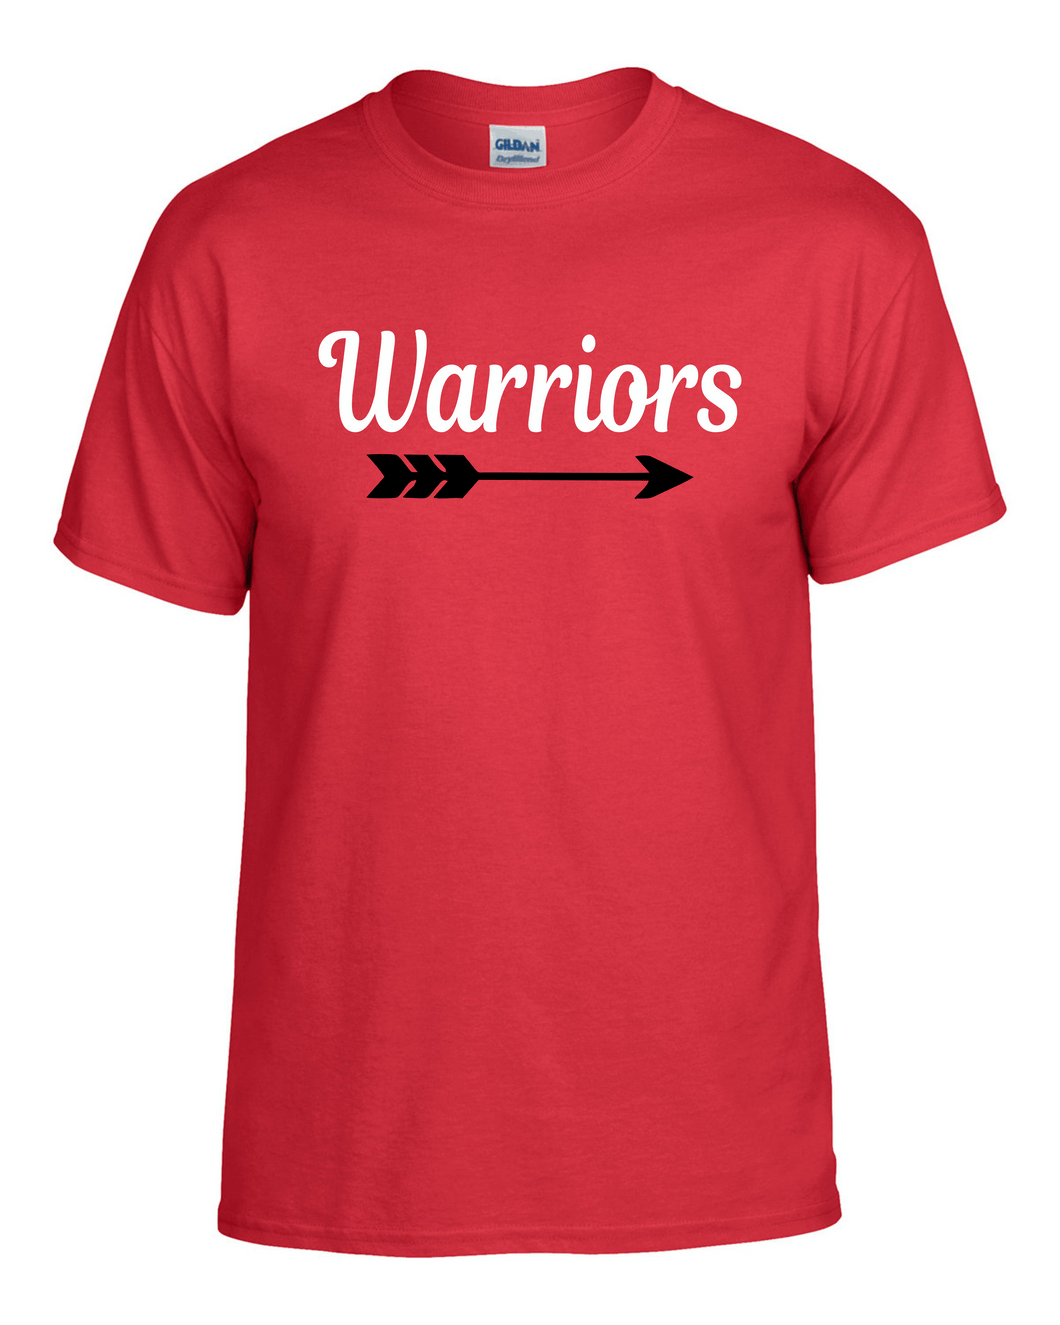 CHS-PTSA-481-4 - Gildan 5.5 oz., 50/50 Short Sleeve T-Shirt -  Warriors Arrow Logo